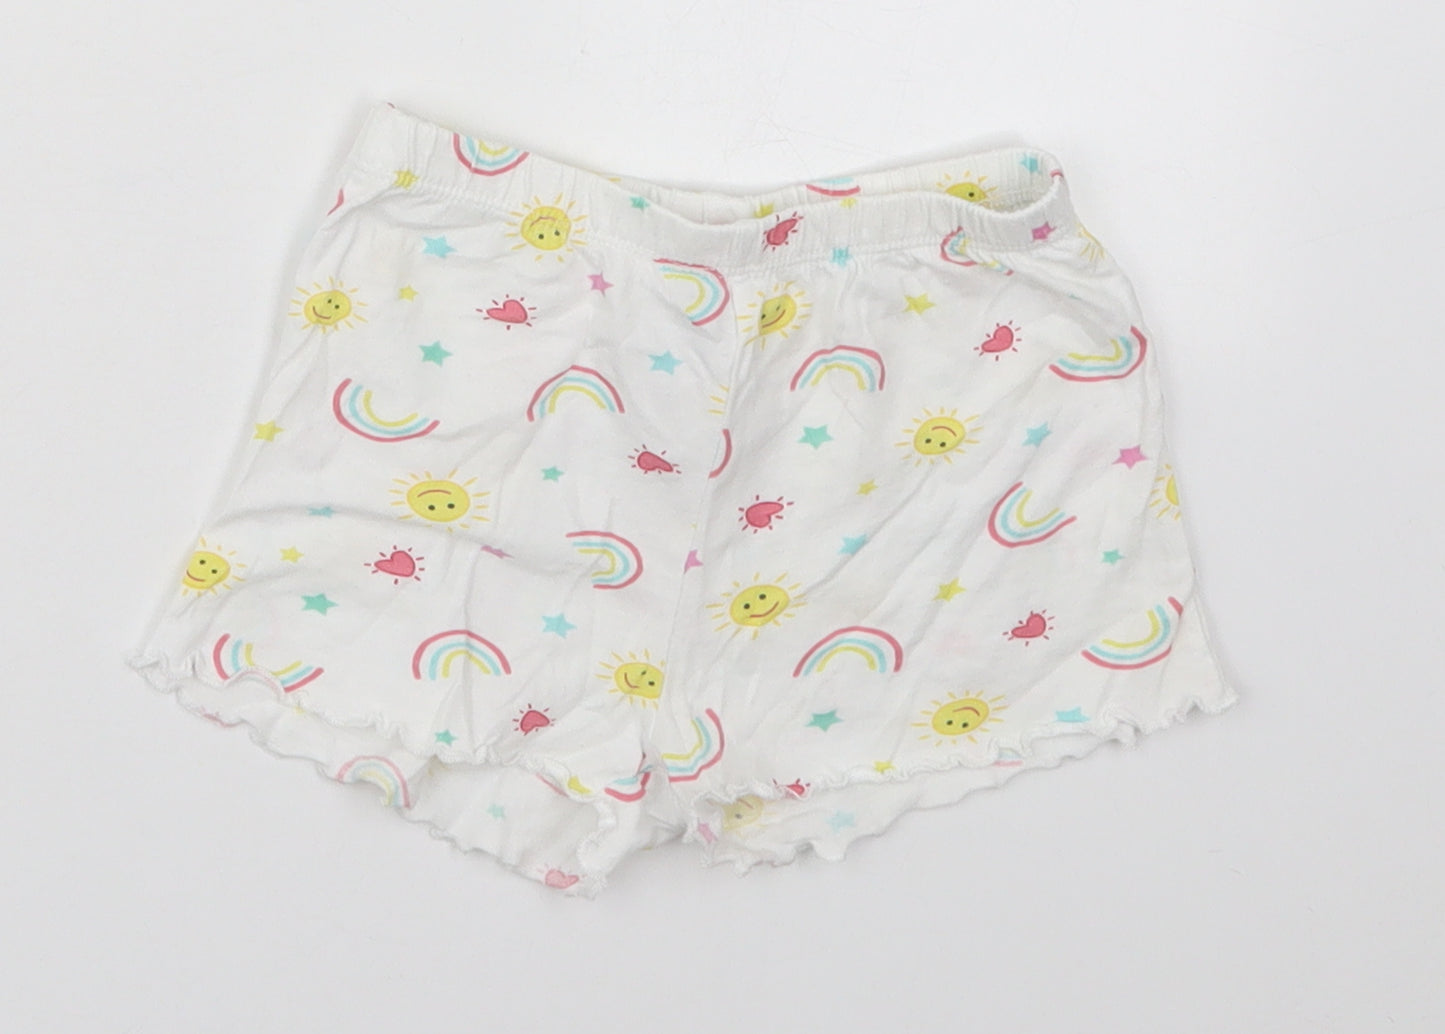 F&F Girls White Geometric Cotton Sweat Shorts Size 2-3 Years  Regular  - Sun and Rainbows Sleep Shorts